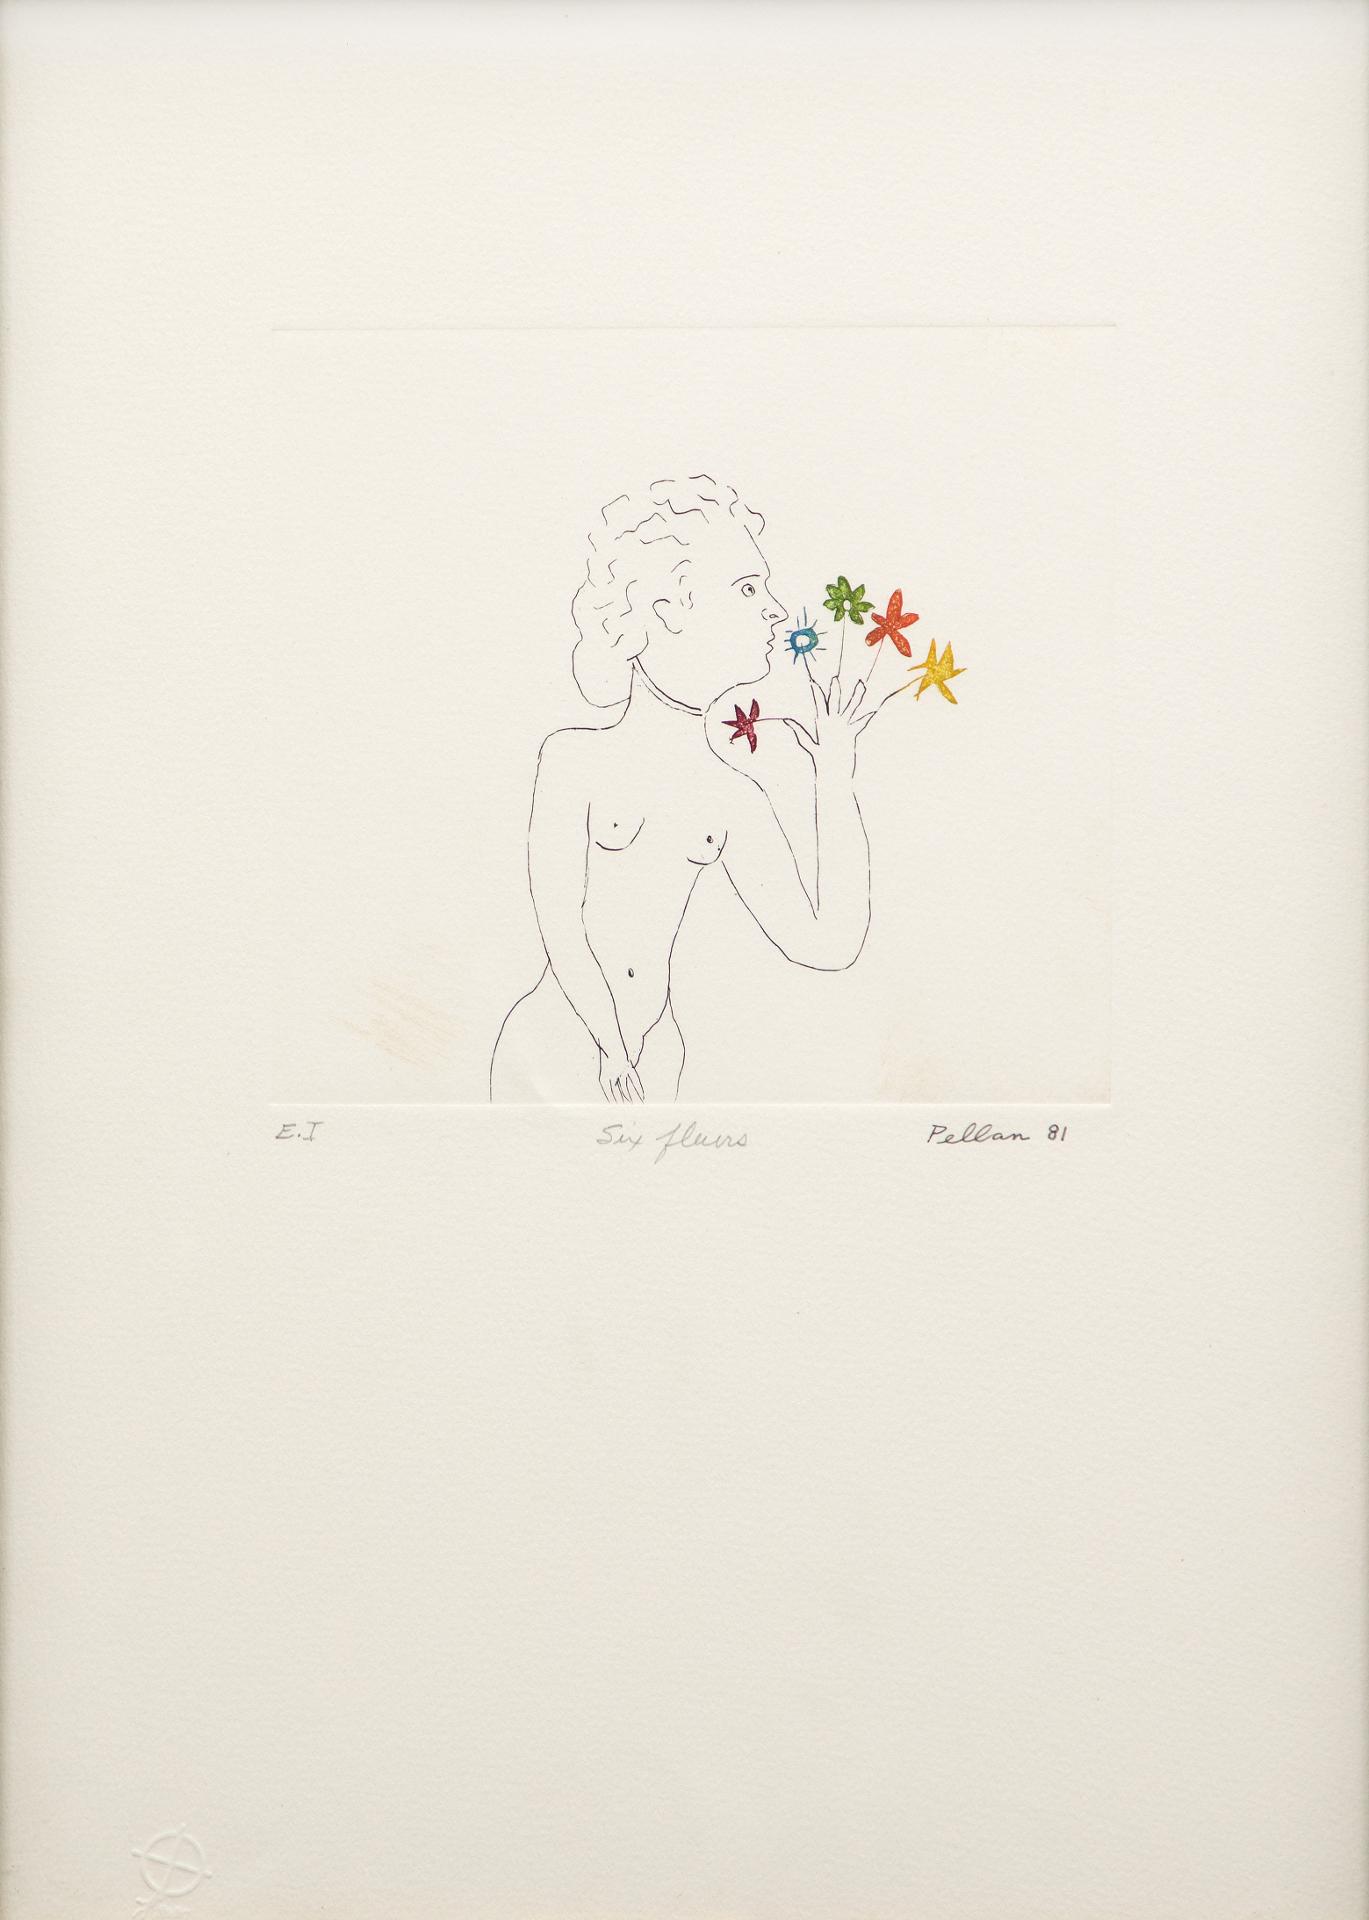 Alfred Pellan (1906-1988) - Six fleurs, 1981